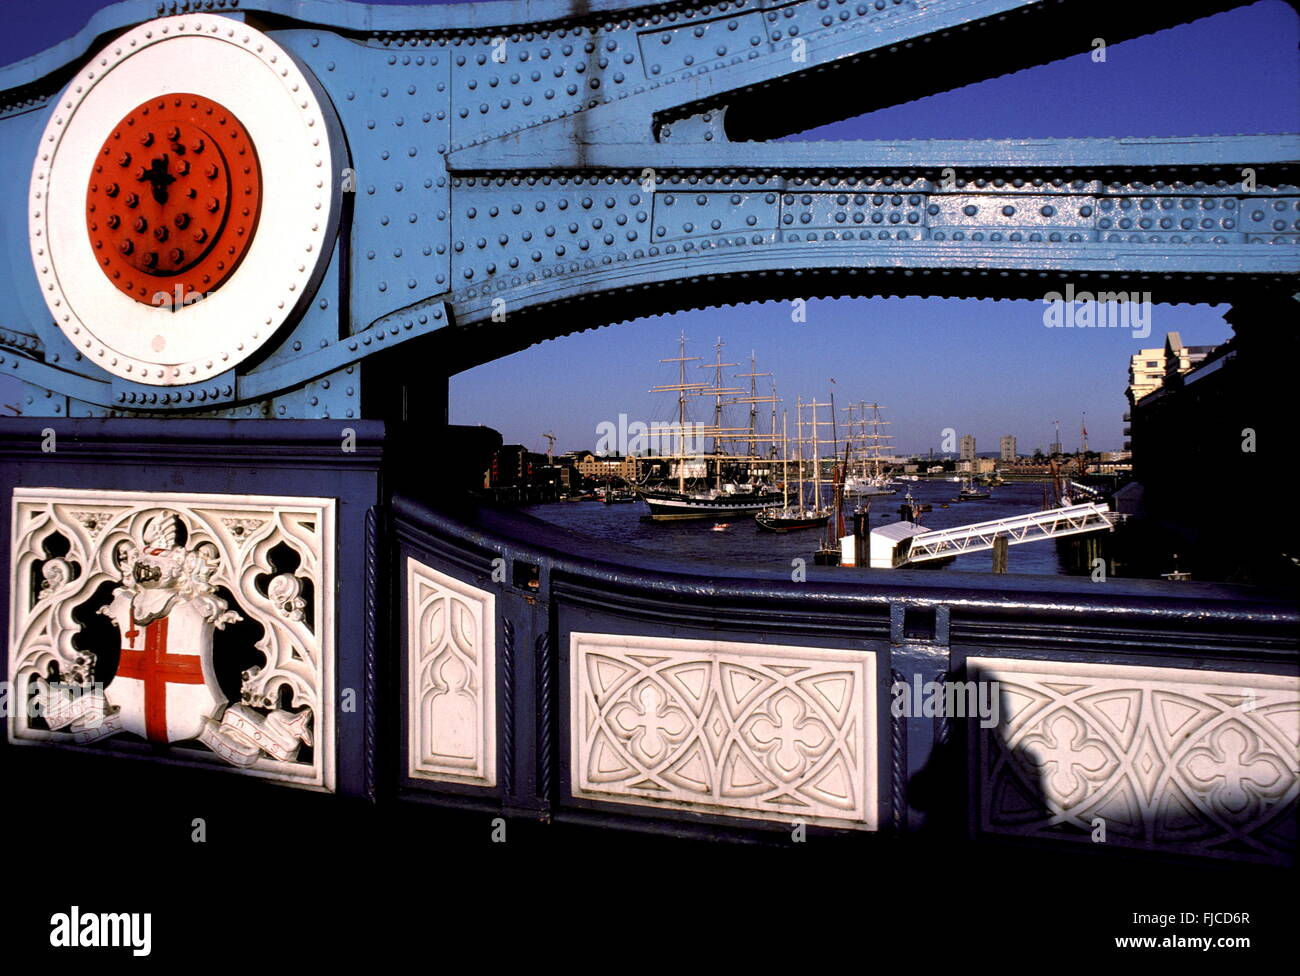 AJAXNETPHOTO. 1989. Londra, Inghilterra. Il TOWER BRIDGE - Ingegneria di dettaglio CONSTRUCTIN CON TALL SHIPS ormeggiato sul fiume Tamigi. Foto:JONATHAN EASTLAND/AJAX REF:215014 111 Foto Stock